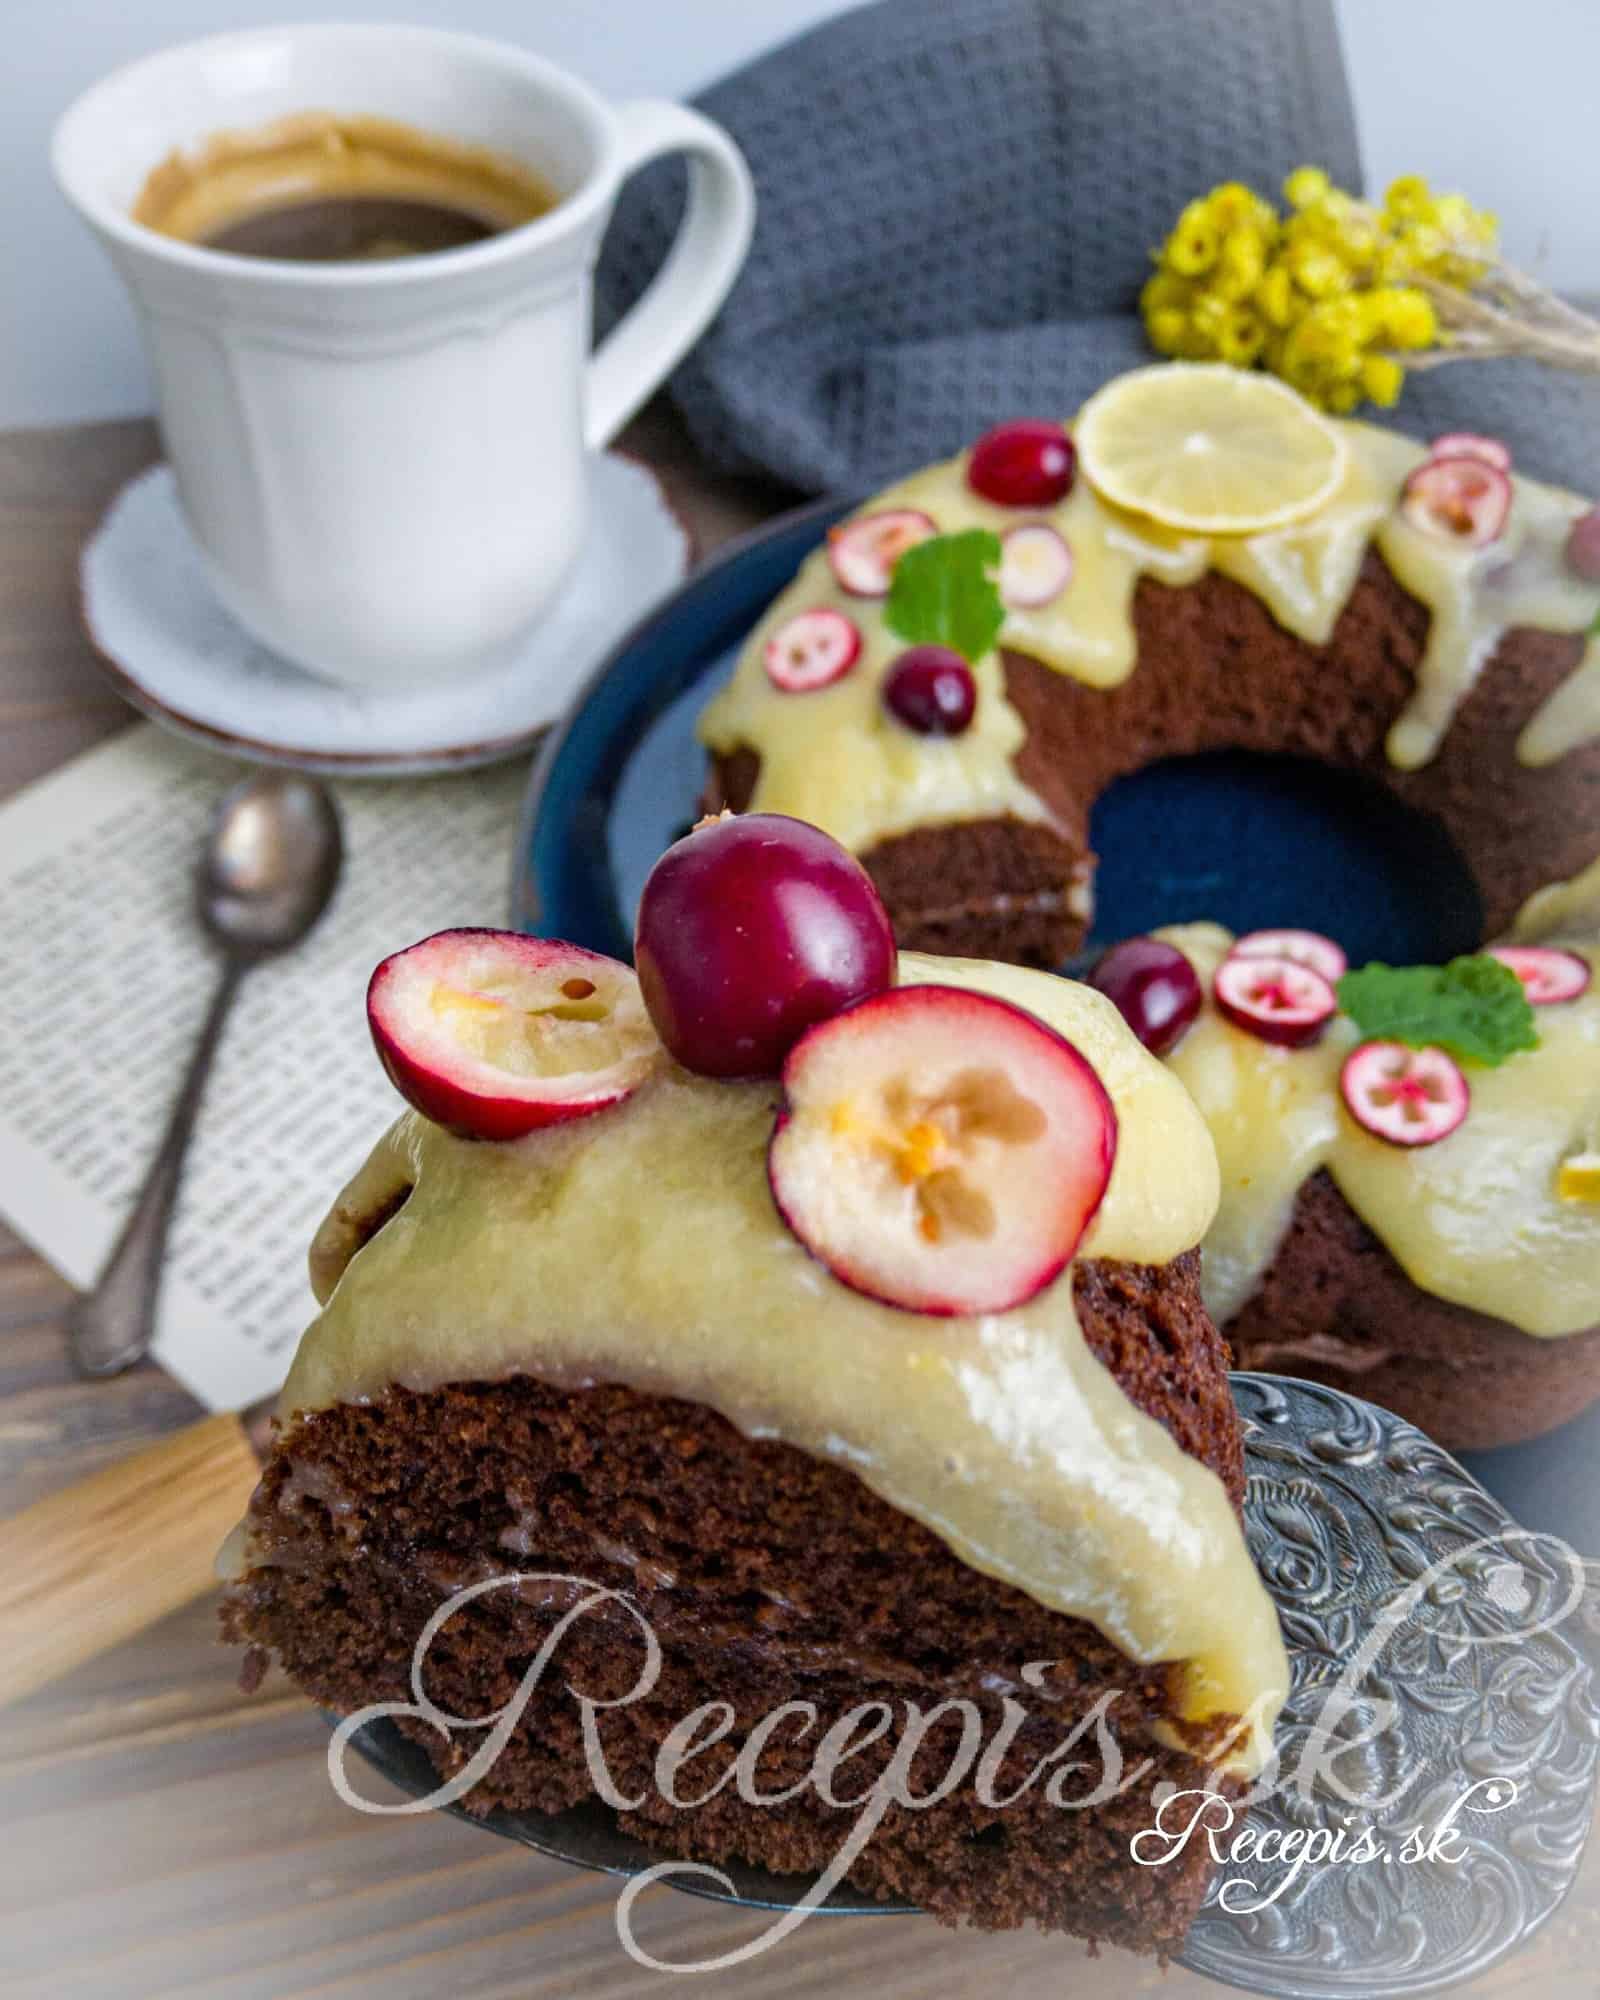 Chocolate cake with lemon curd